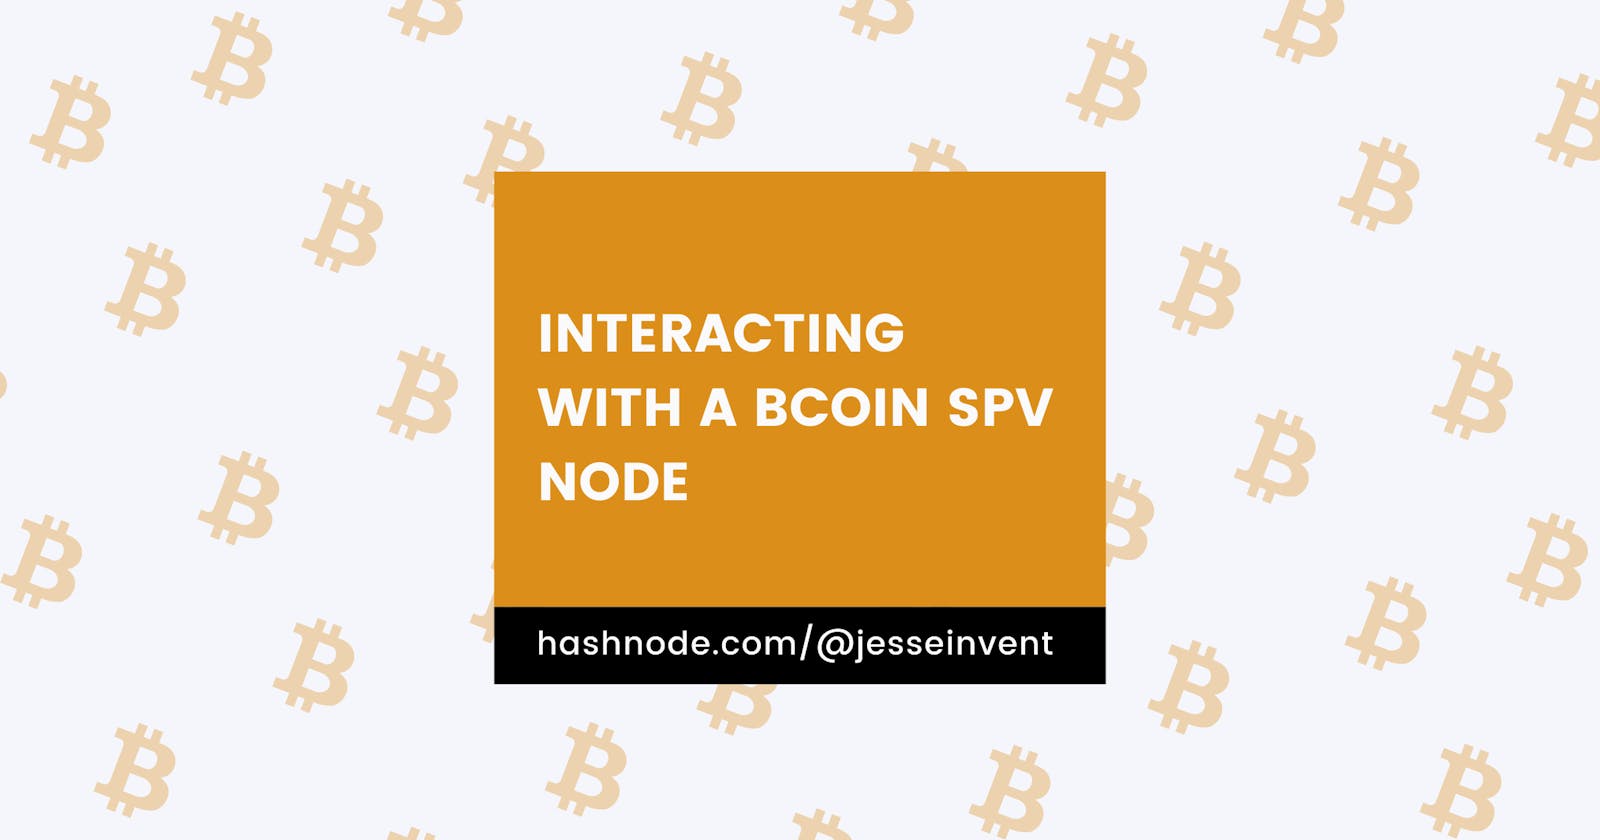 Interacting with a Bitcoin SPV node